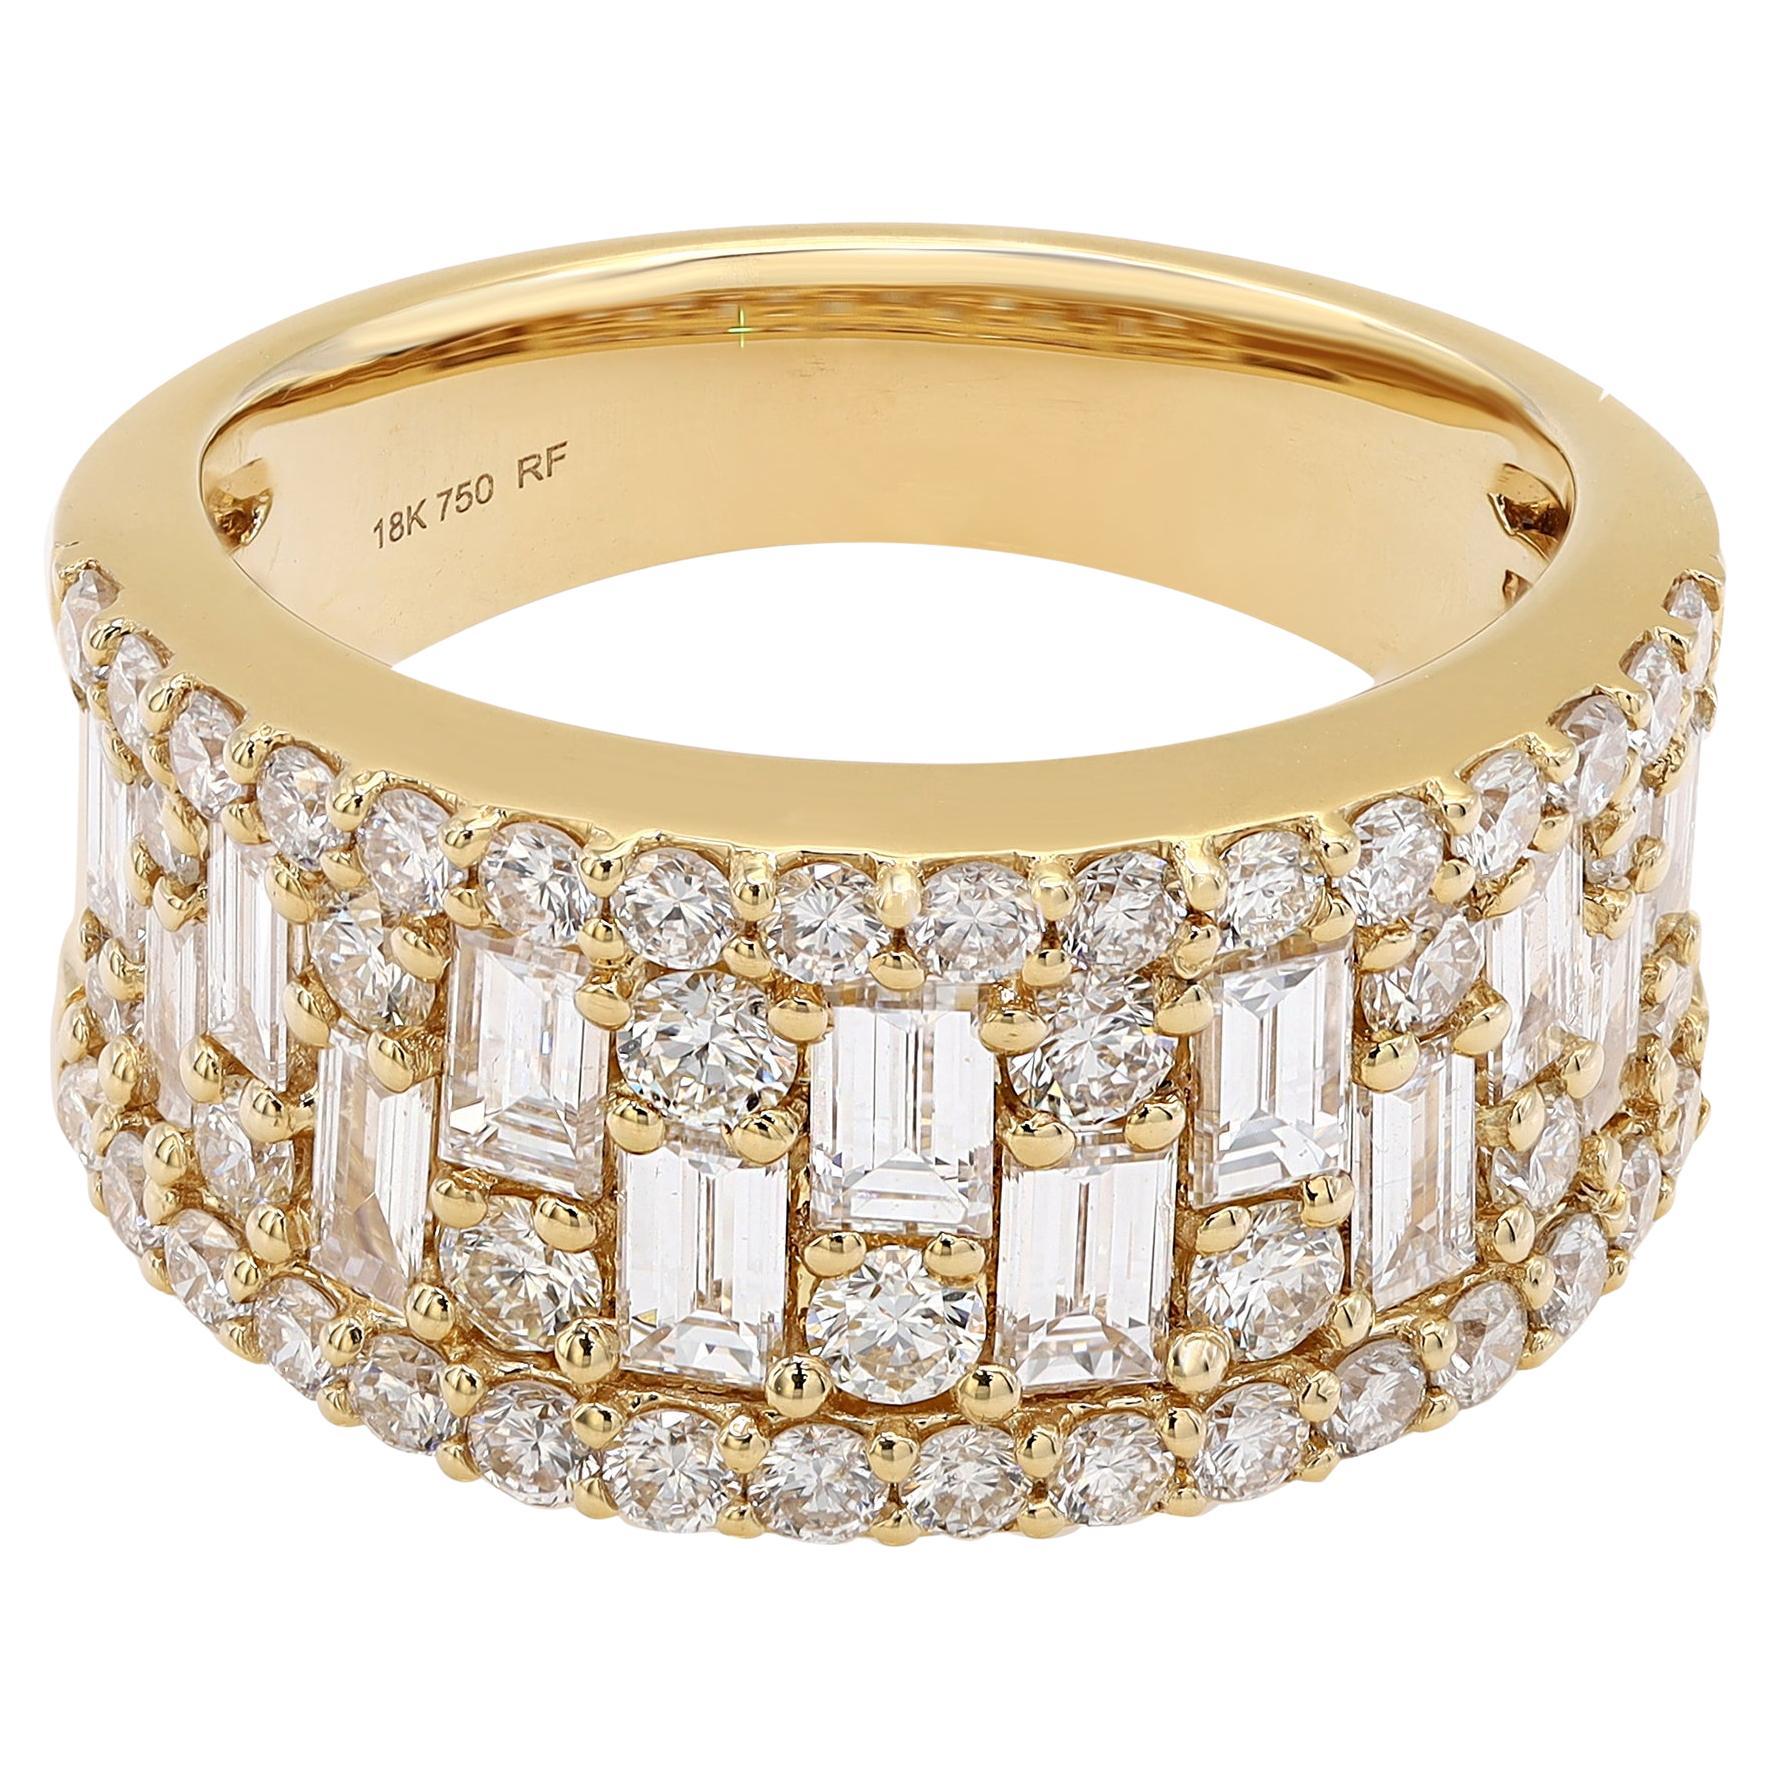 Rachel Koen Baguette Round Cut Diamond Ring 18K Yellow Gold 2.11cttw For Sale